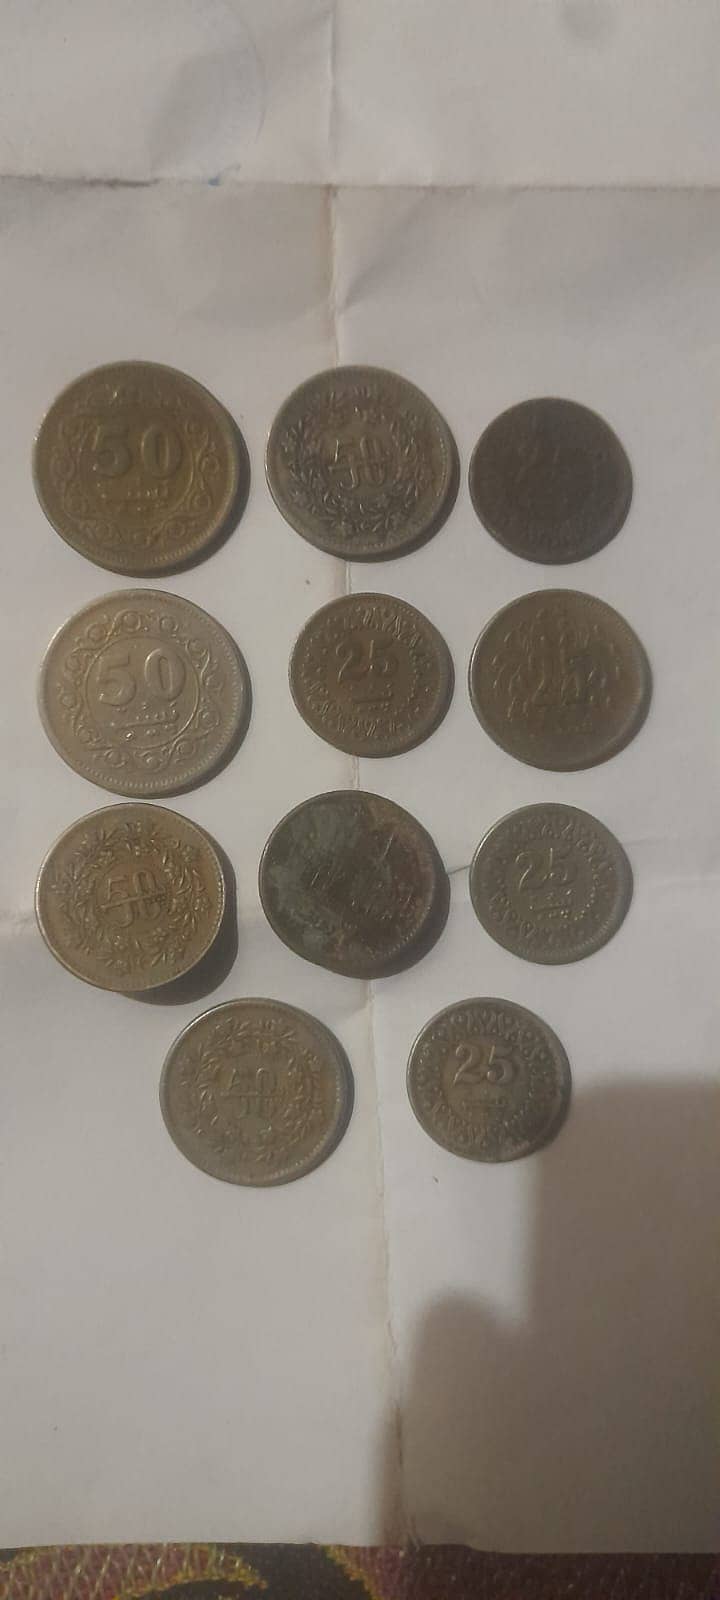 Antique coins for sale 0